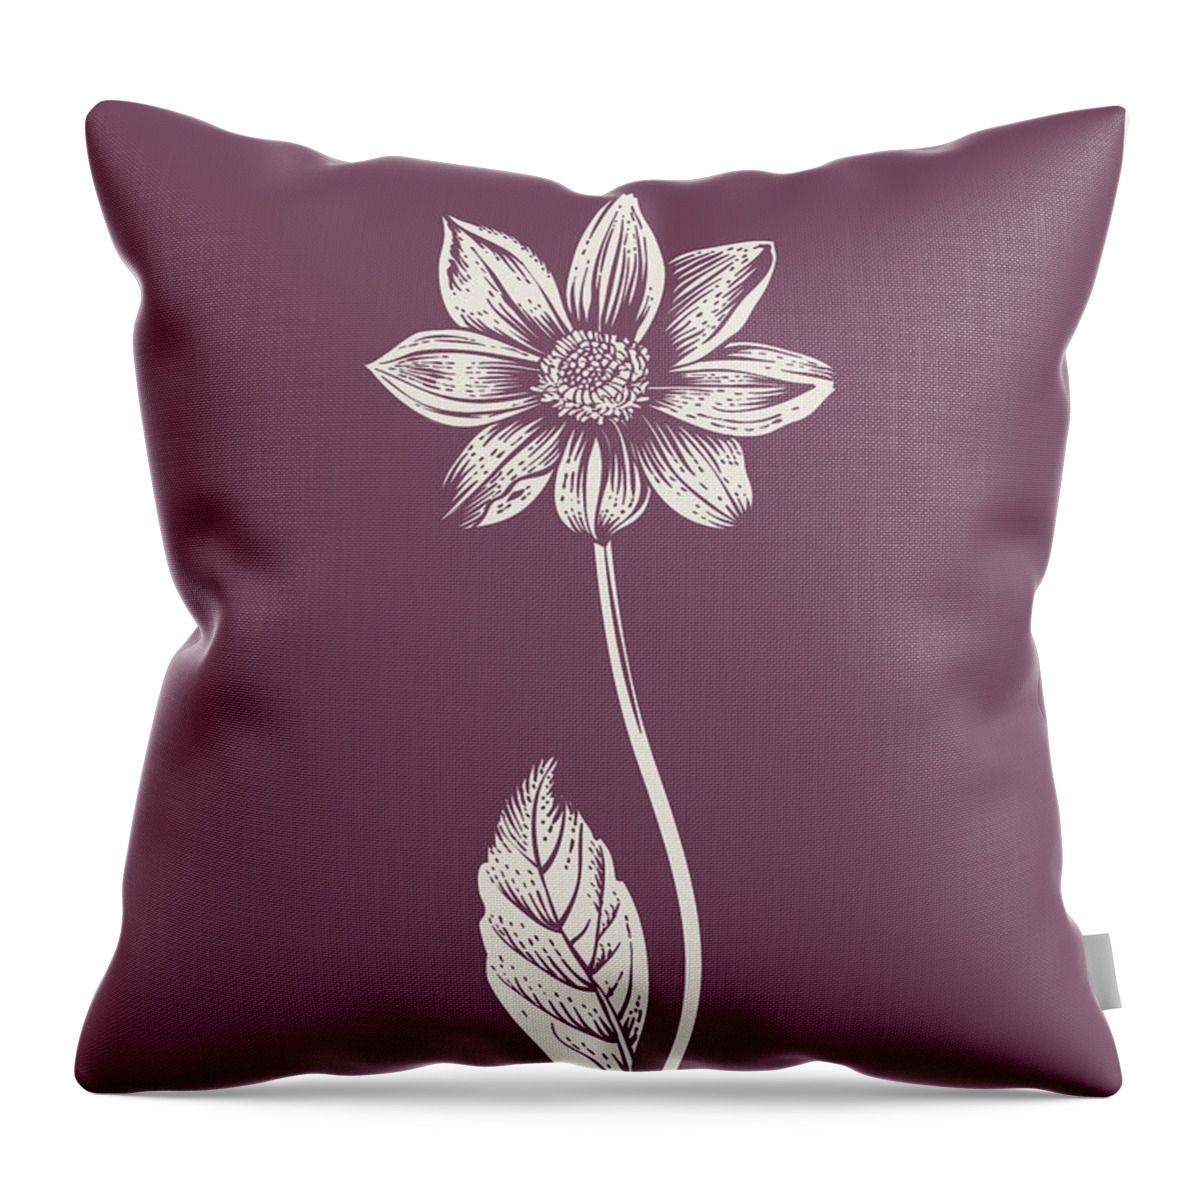 Dahlia Throw Pillow featuring the mixed media Dahlia Purple Flower by Naxart Studio